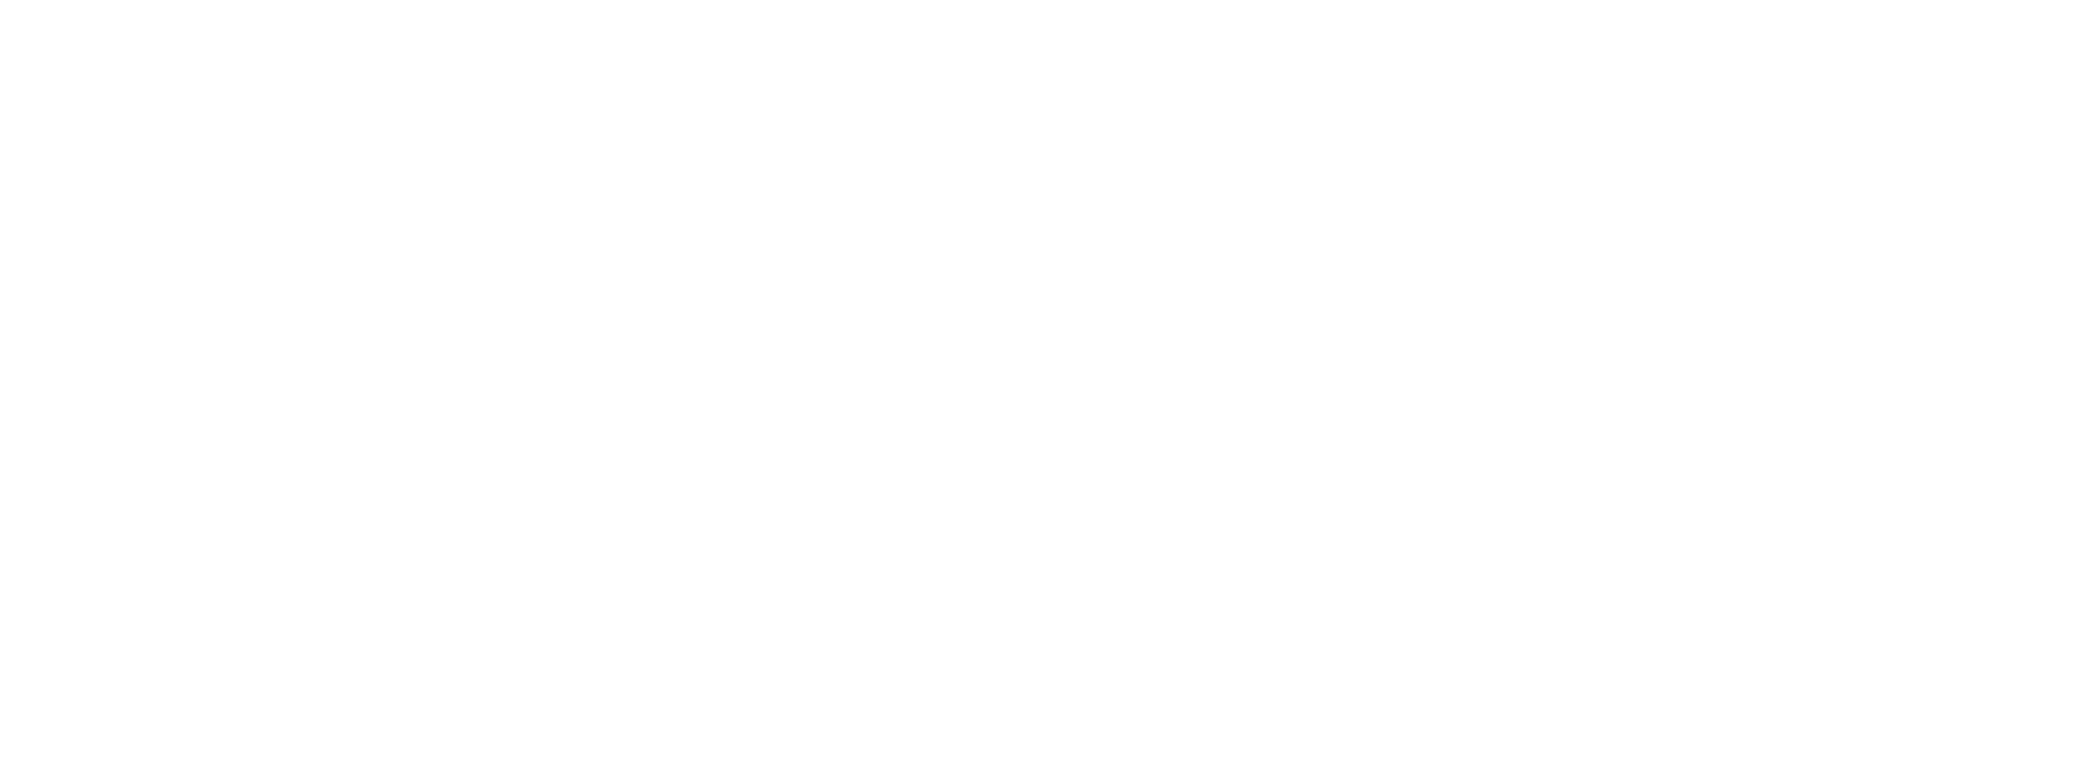 Artsmith Photography